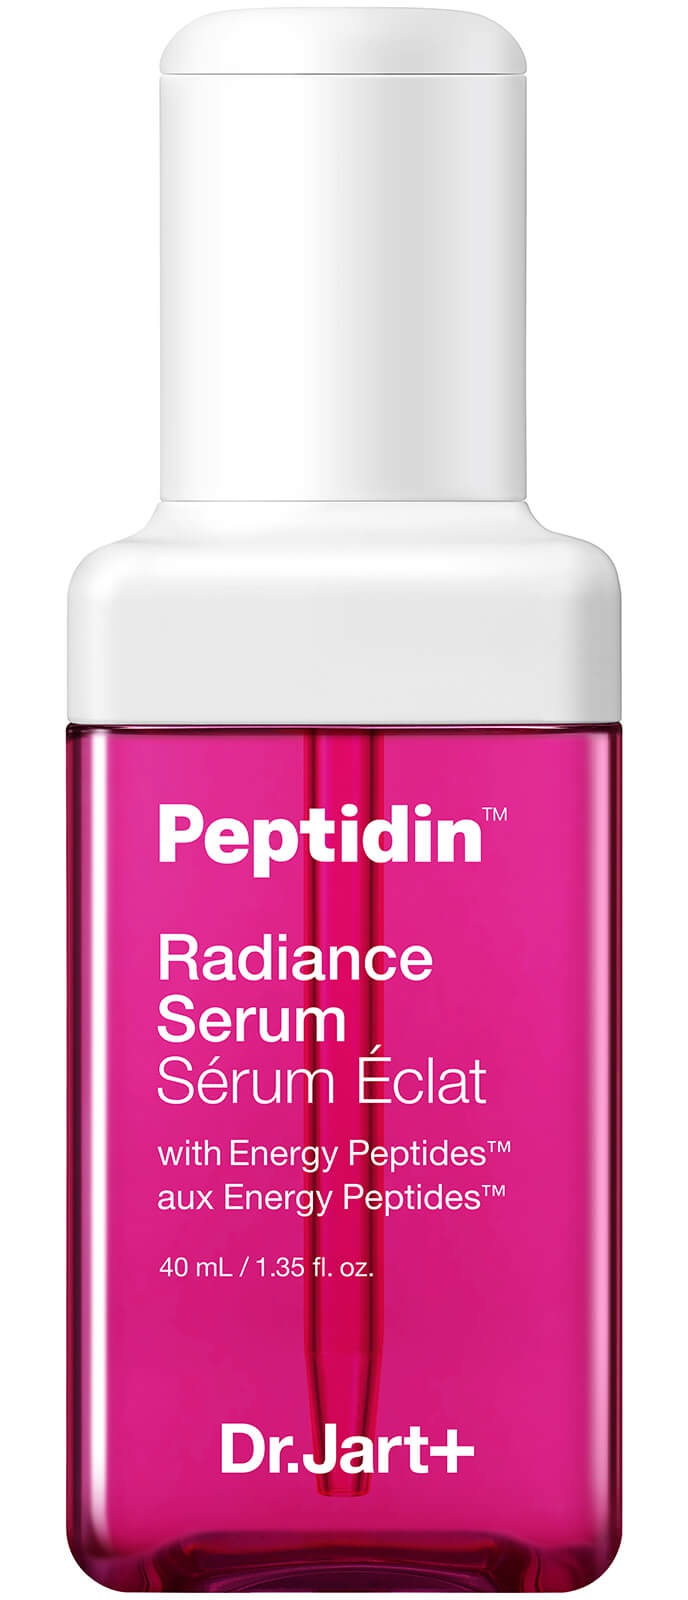 Dr. Jart+ Peptidin Radiance Serum